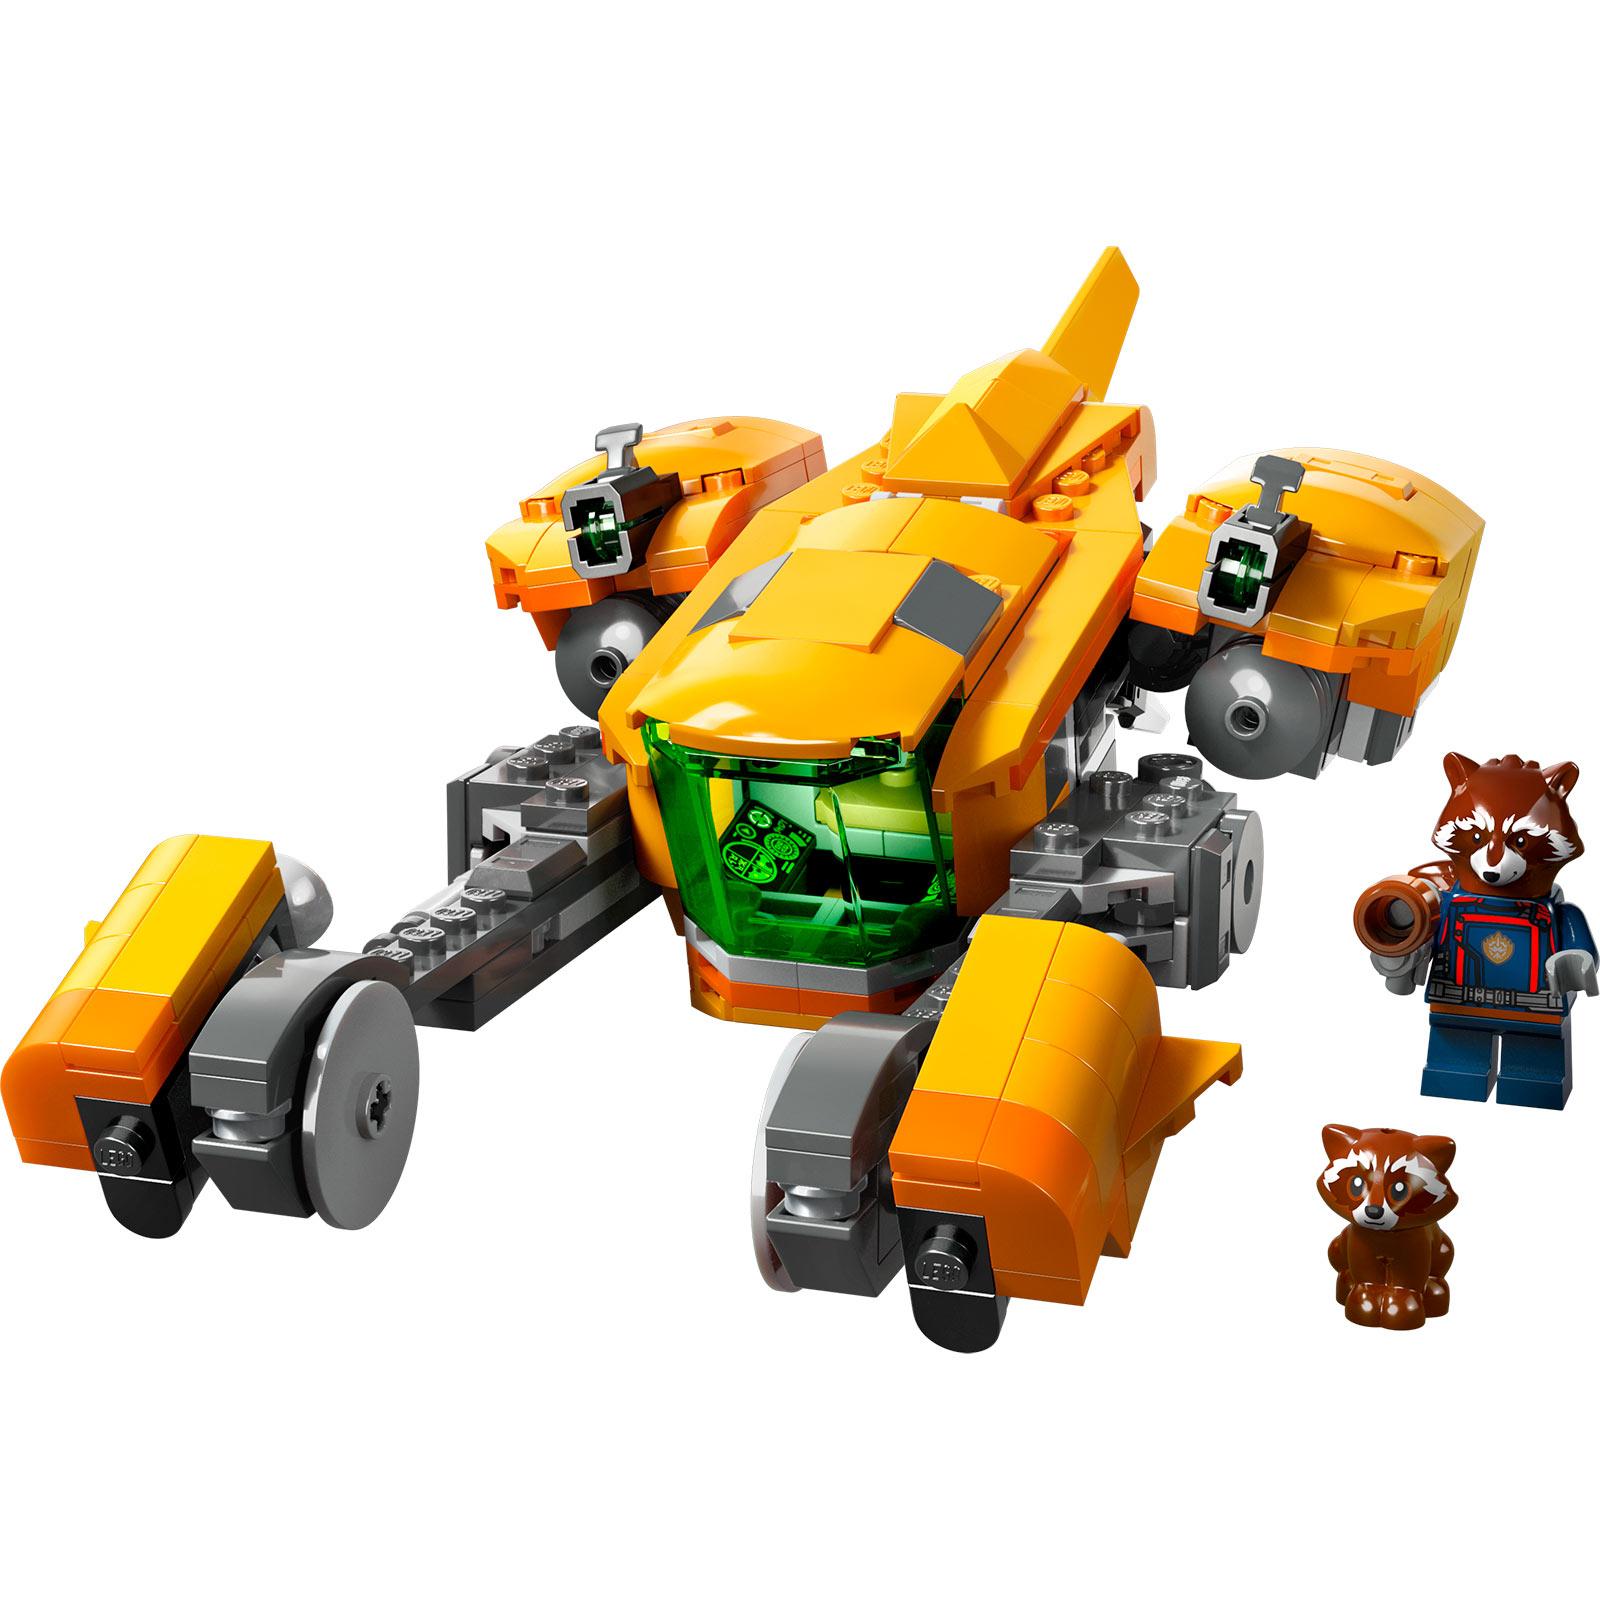 Selected image for LEGO Kocke Brod bebe Roketa 76254